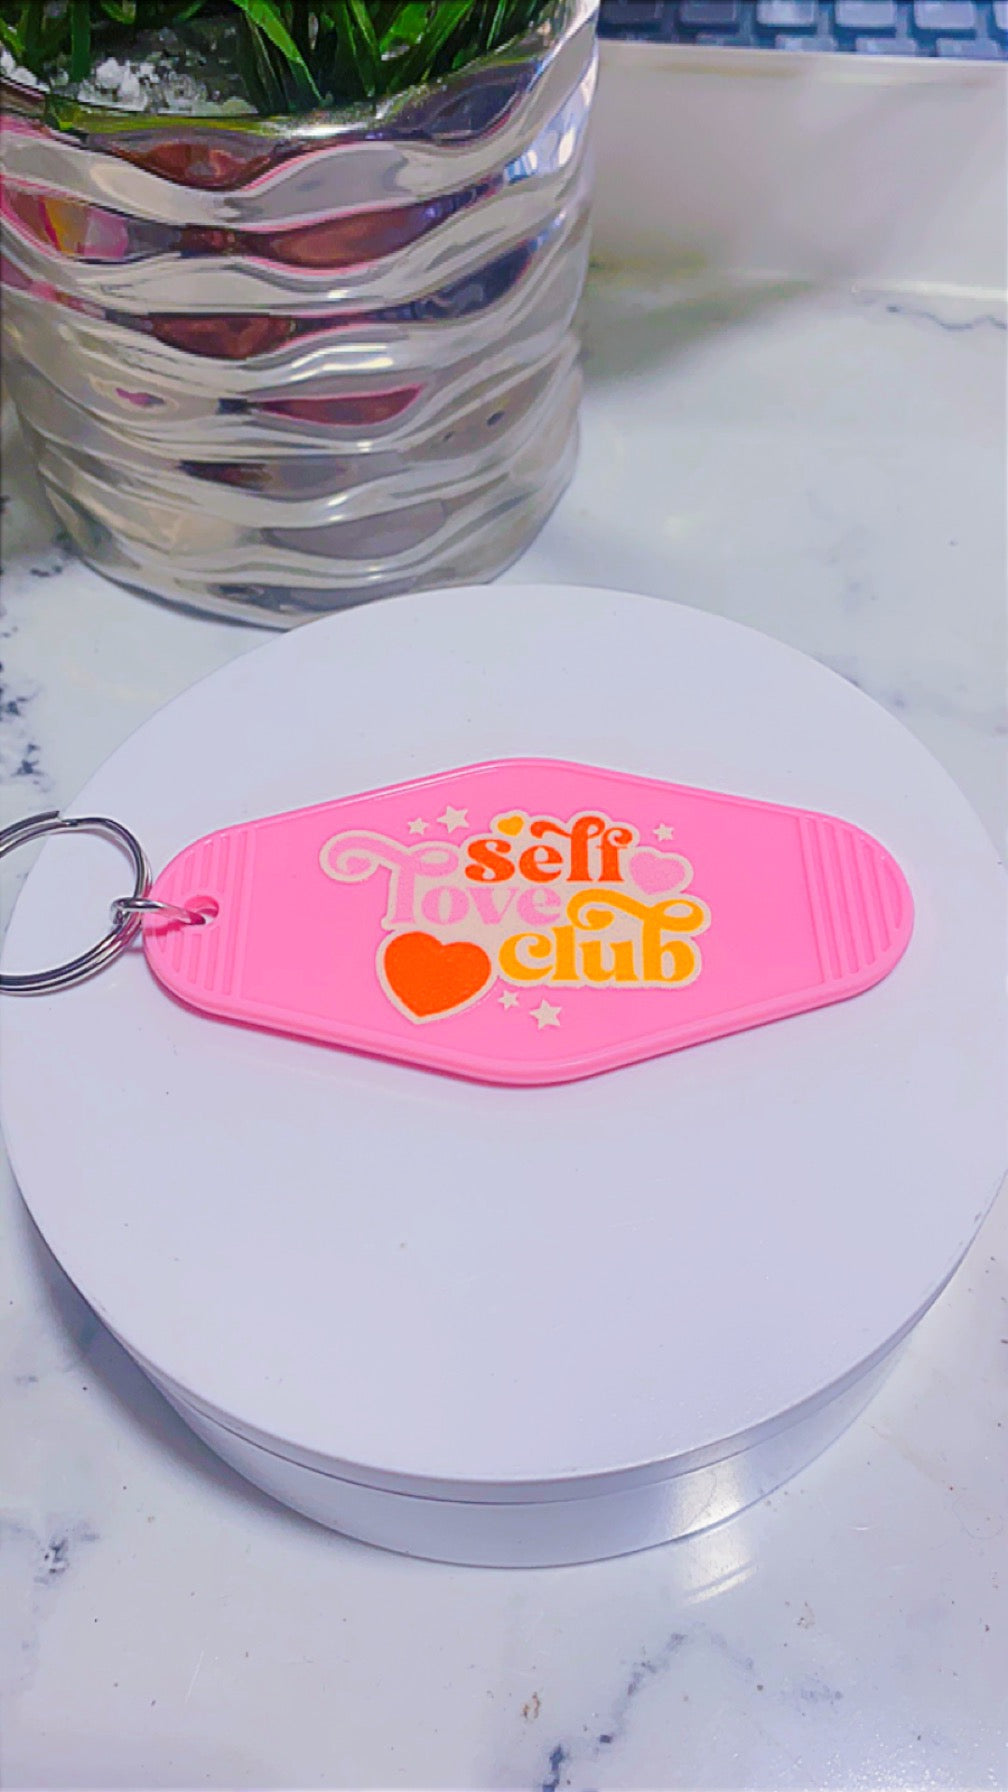 Self love club keychain